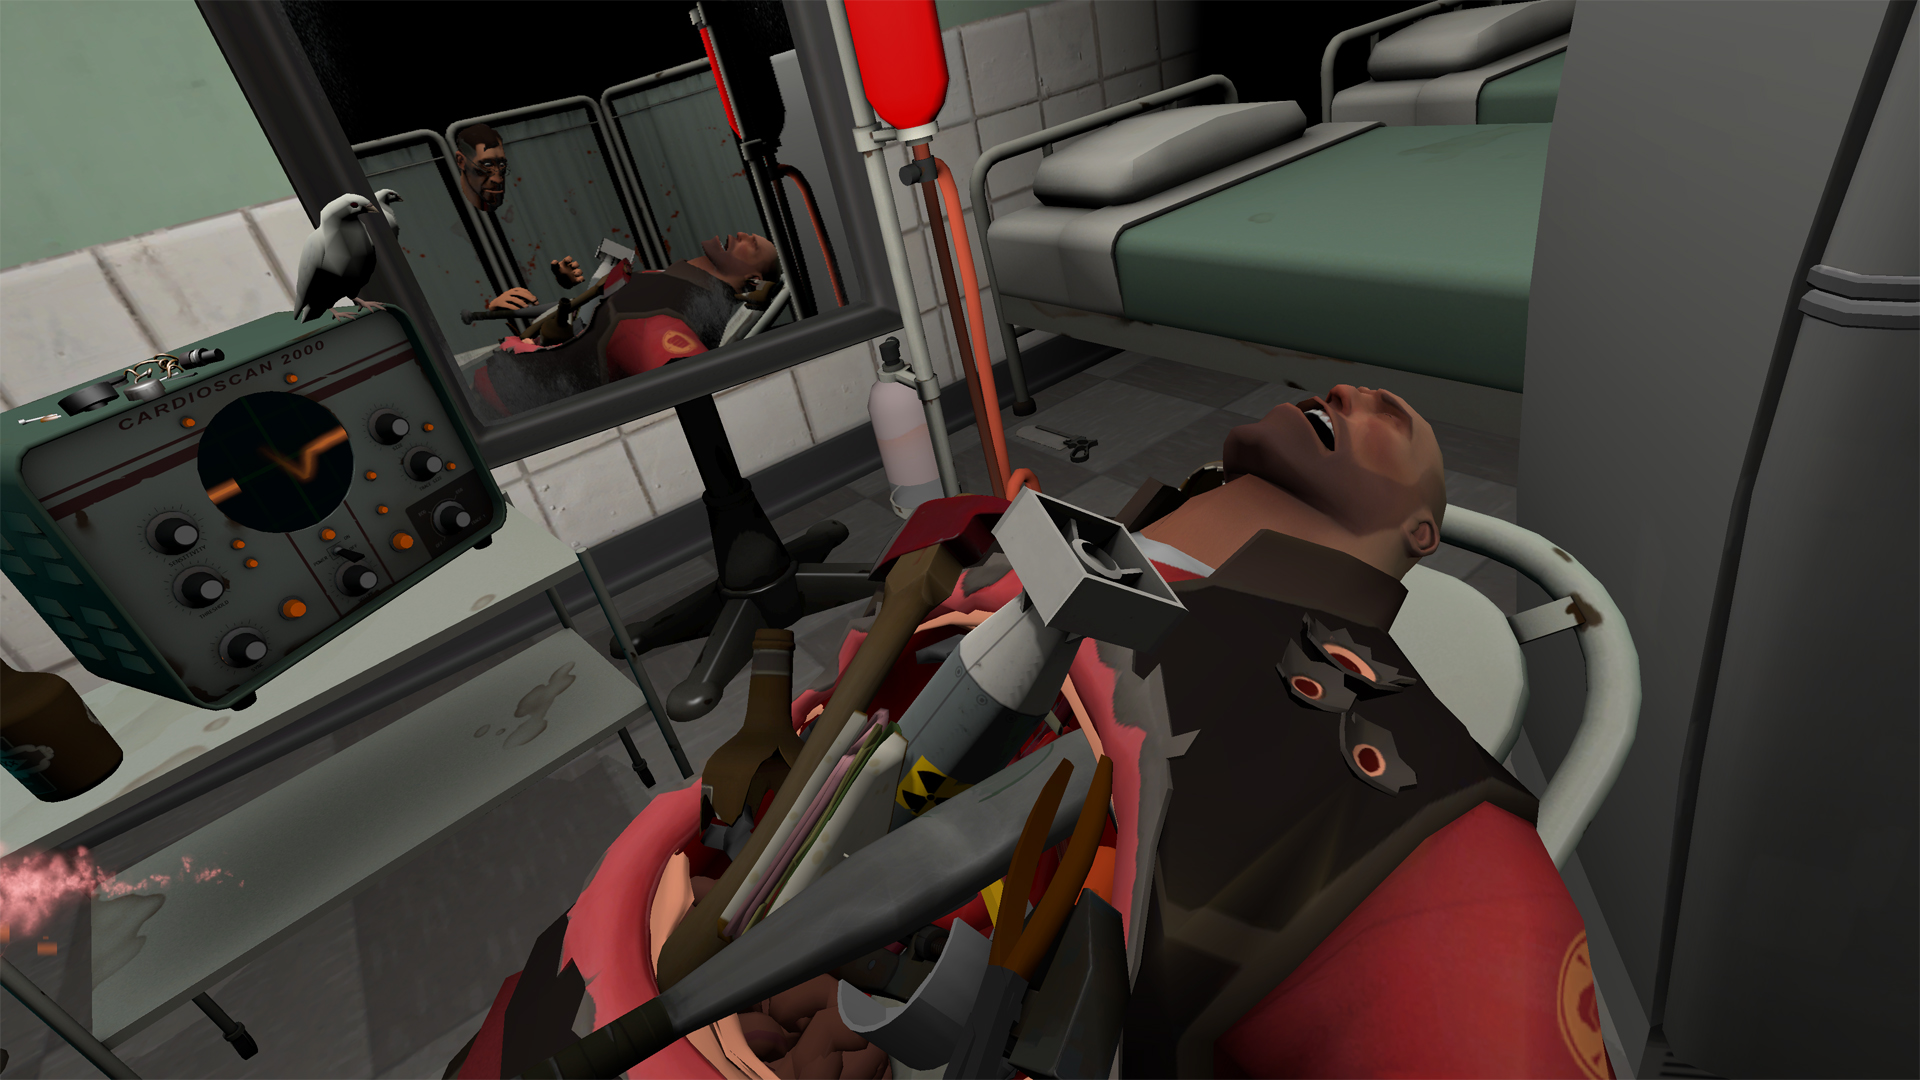 Surgeon Simulator VR: Meet The Medic on Steam